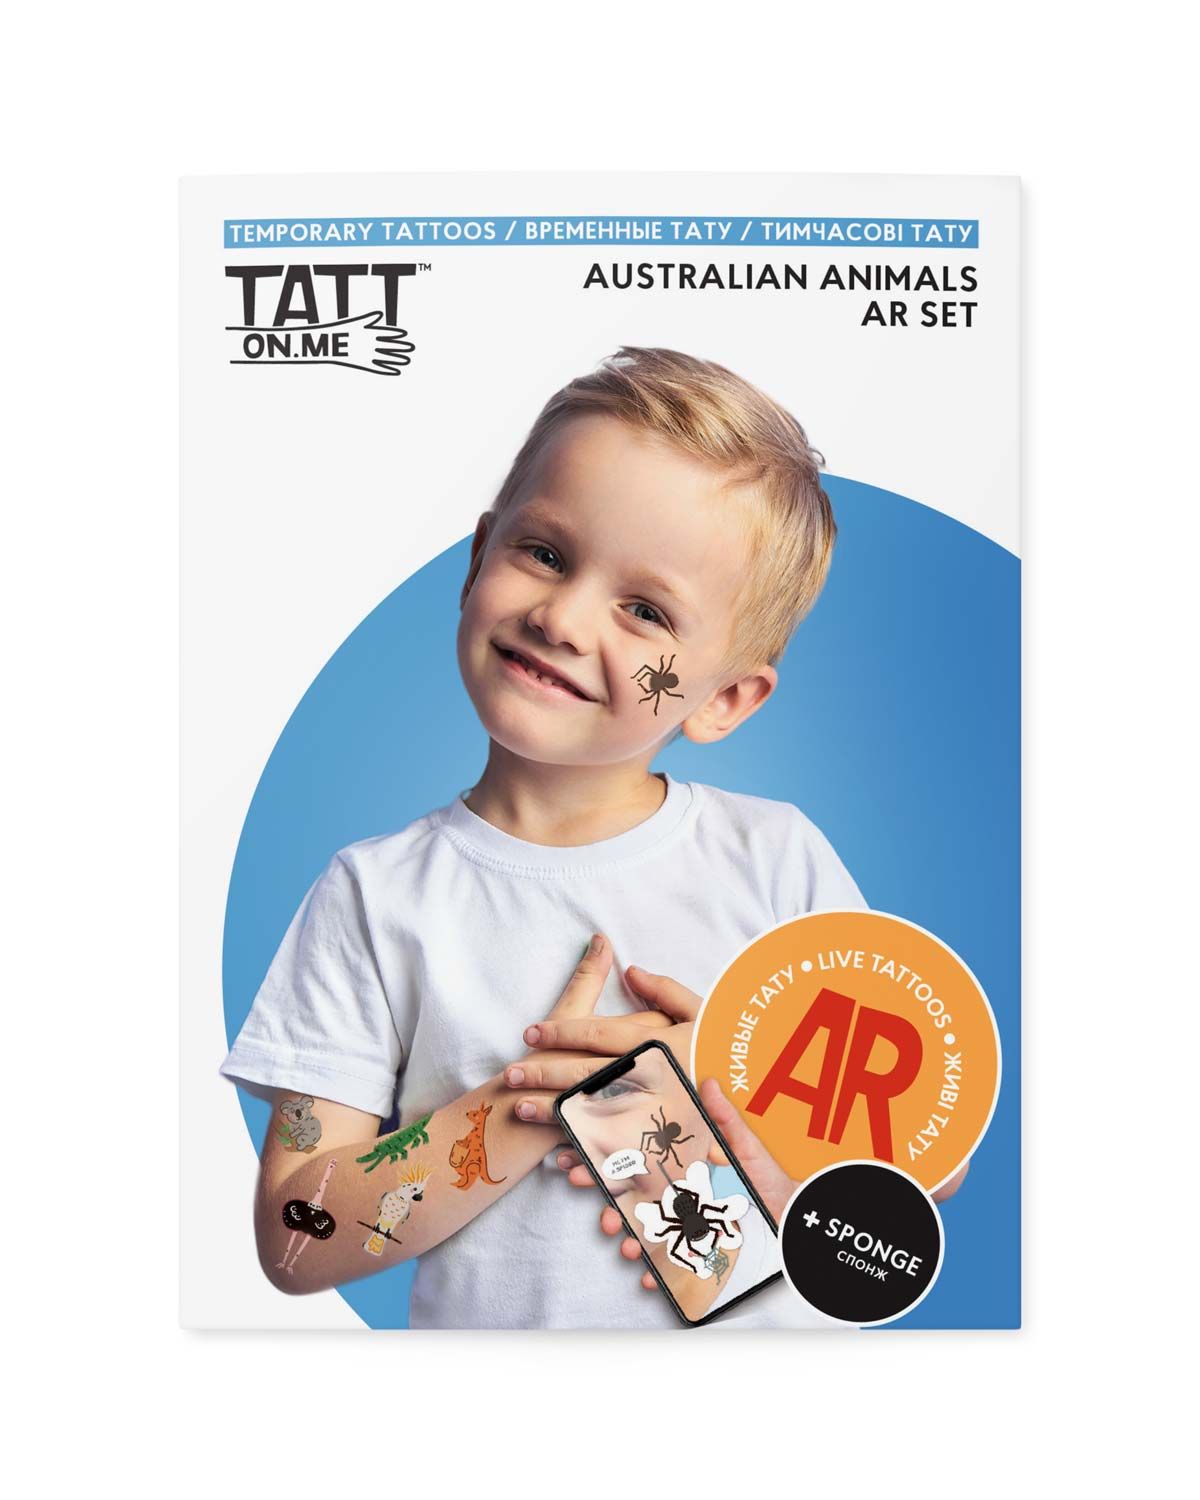 Live AR tatts - Australian Animals - TATTon.me temporary tattoos